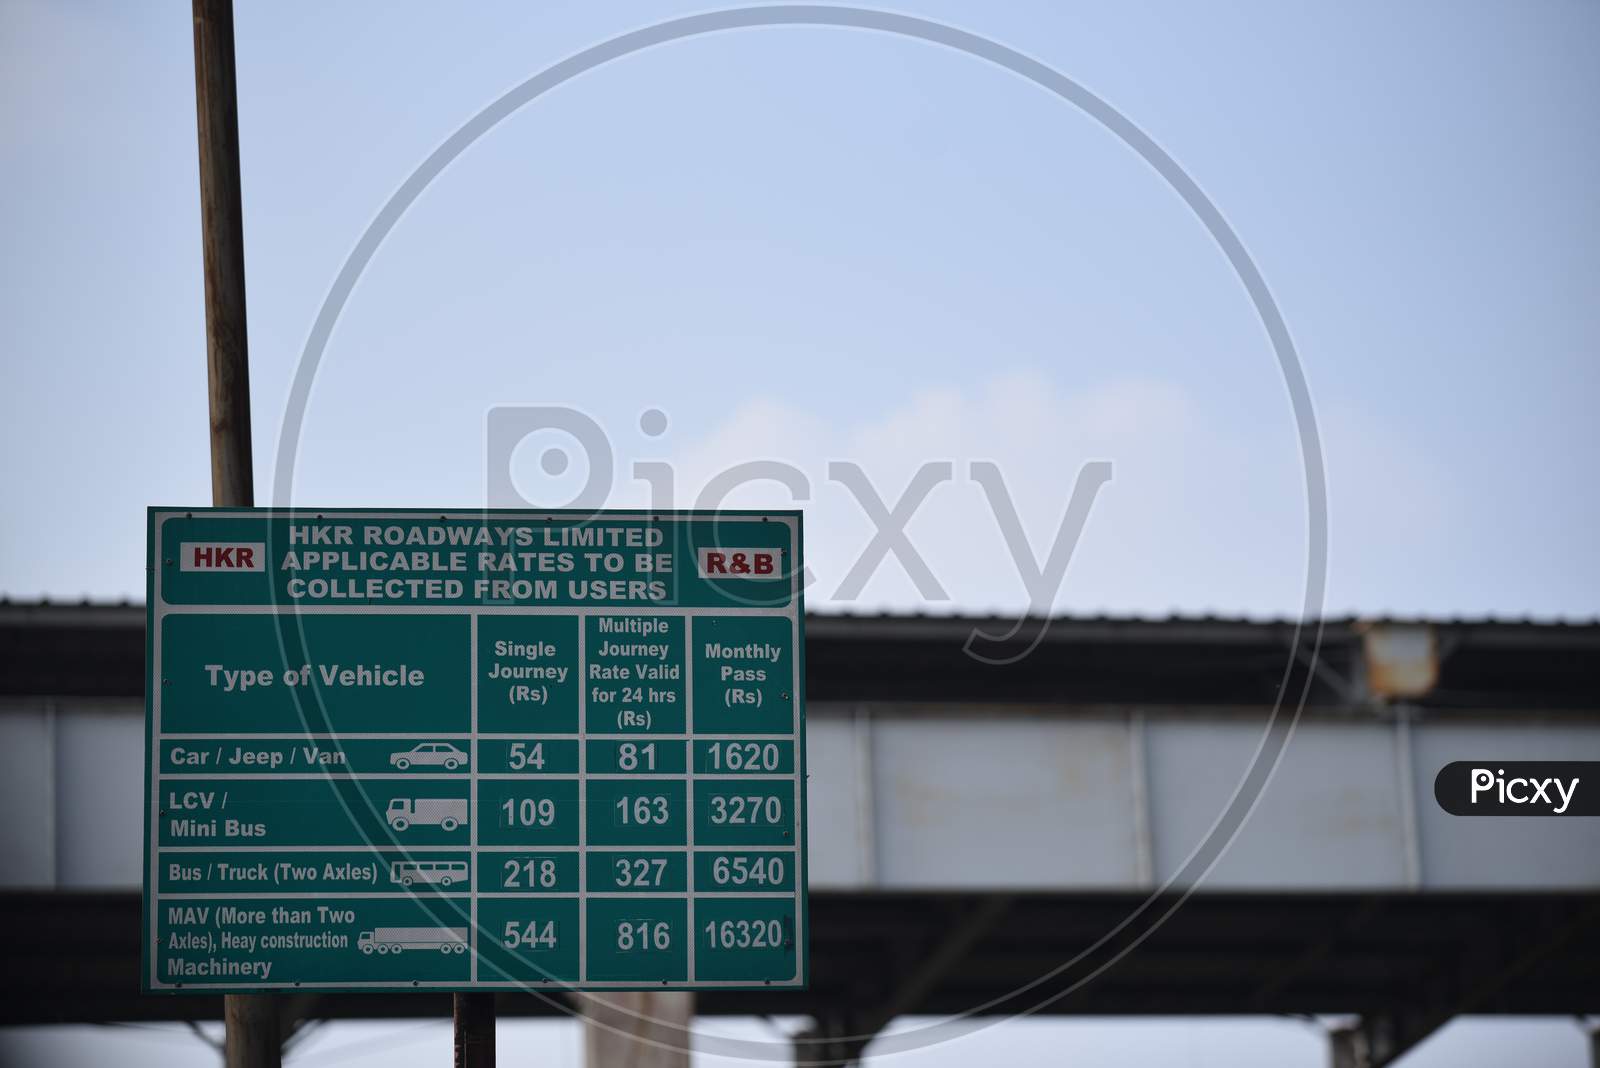 Toll rates at HKR Roadways Ltd on Hyderabad-Karimnagar Highway